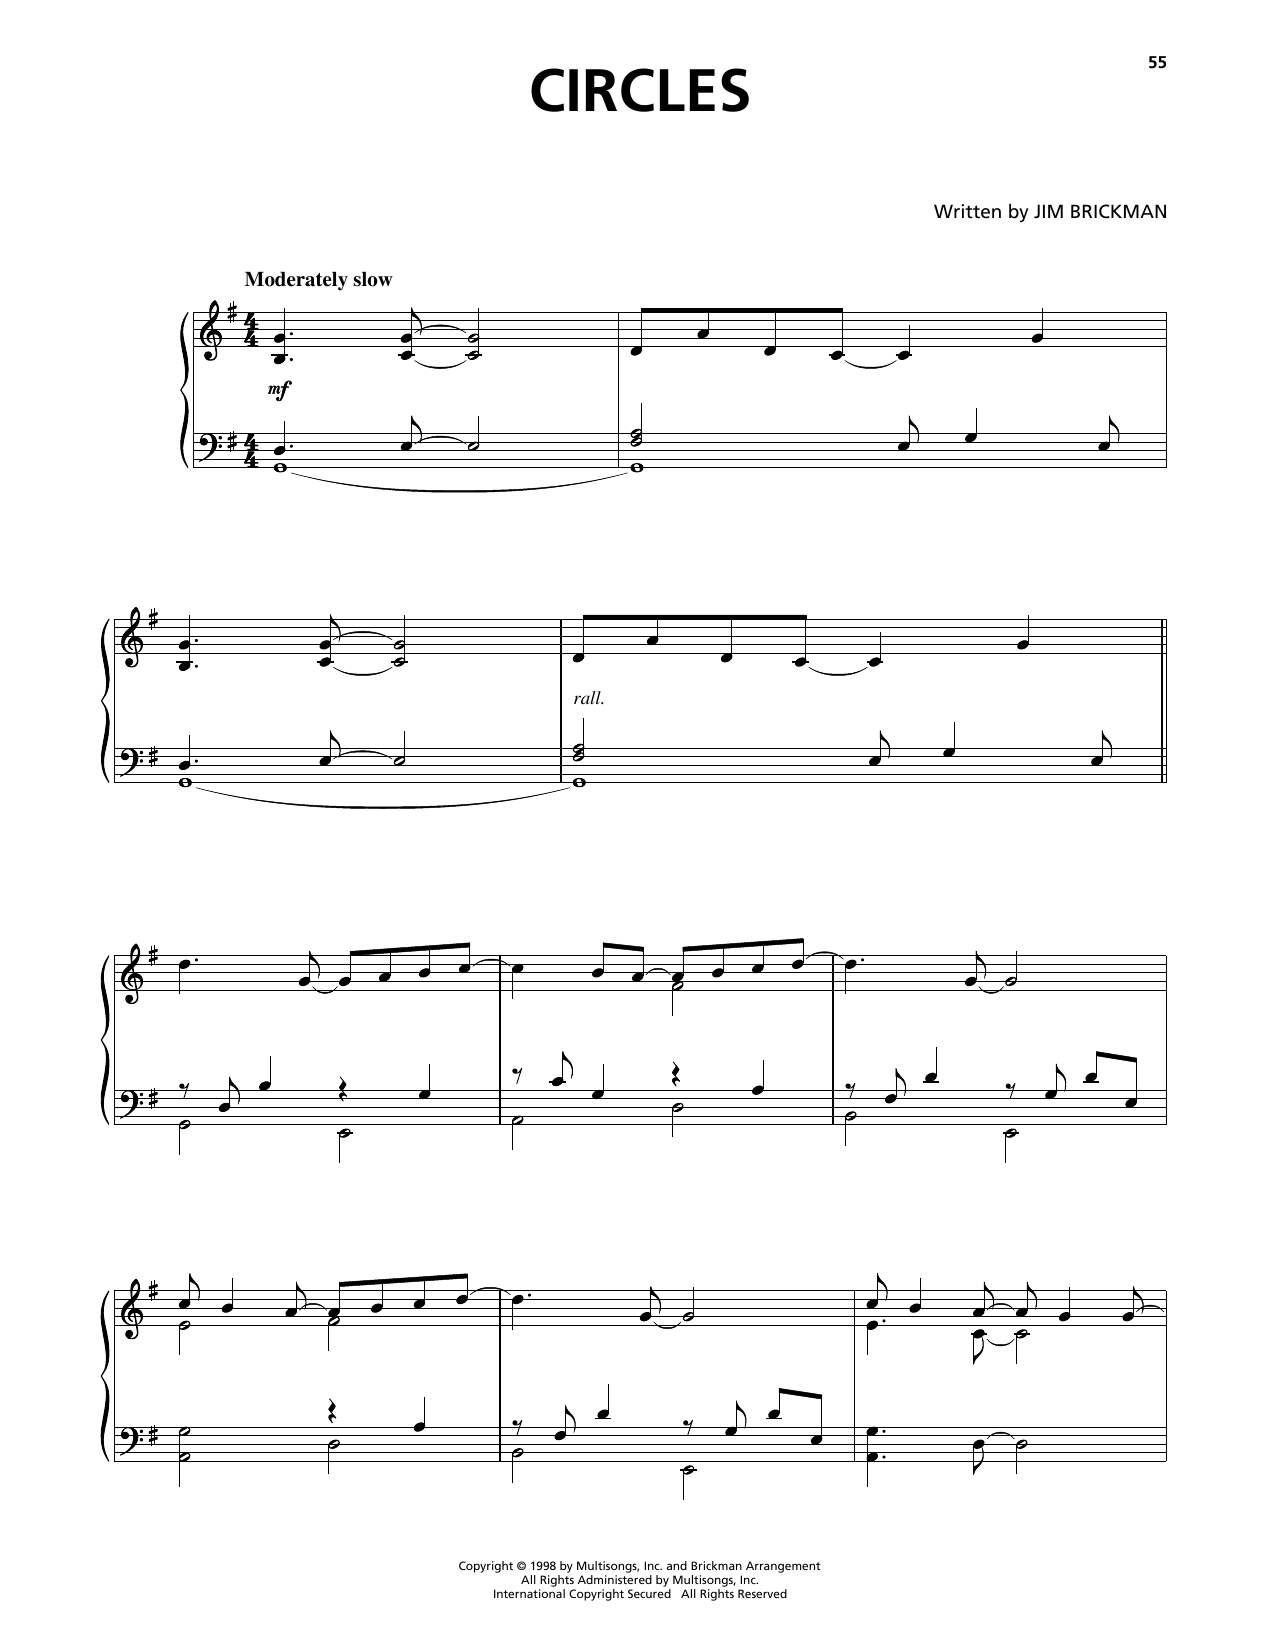 Jim Brickman Circles Sheet Music Notes & Chords for Piano Solo - Download or Print PDF